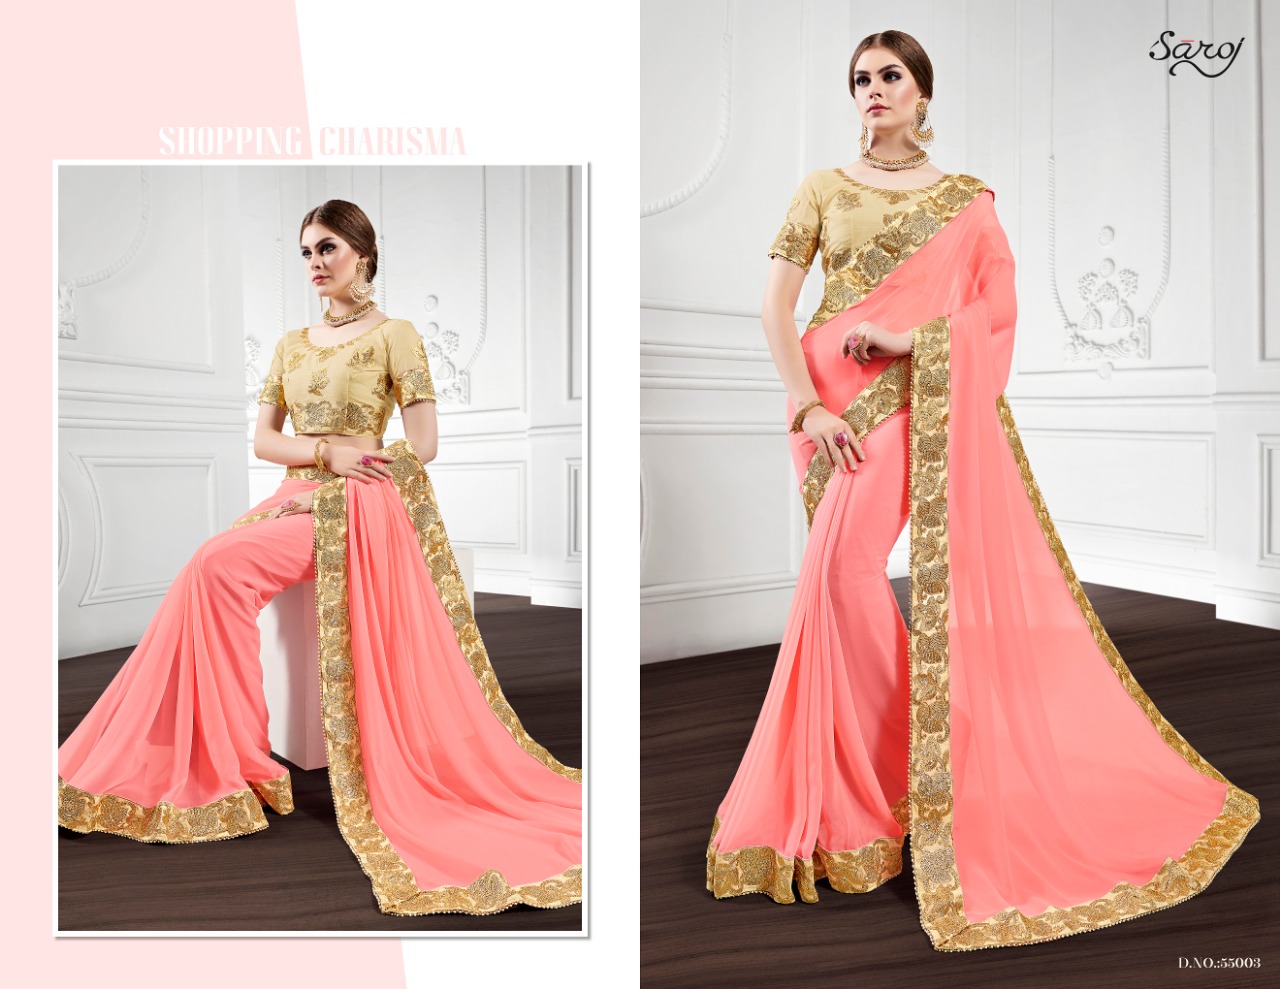 Saroj Saree Indian Fashion 55003